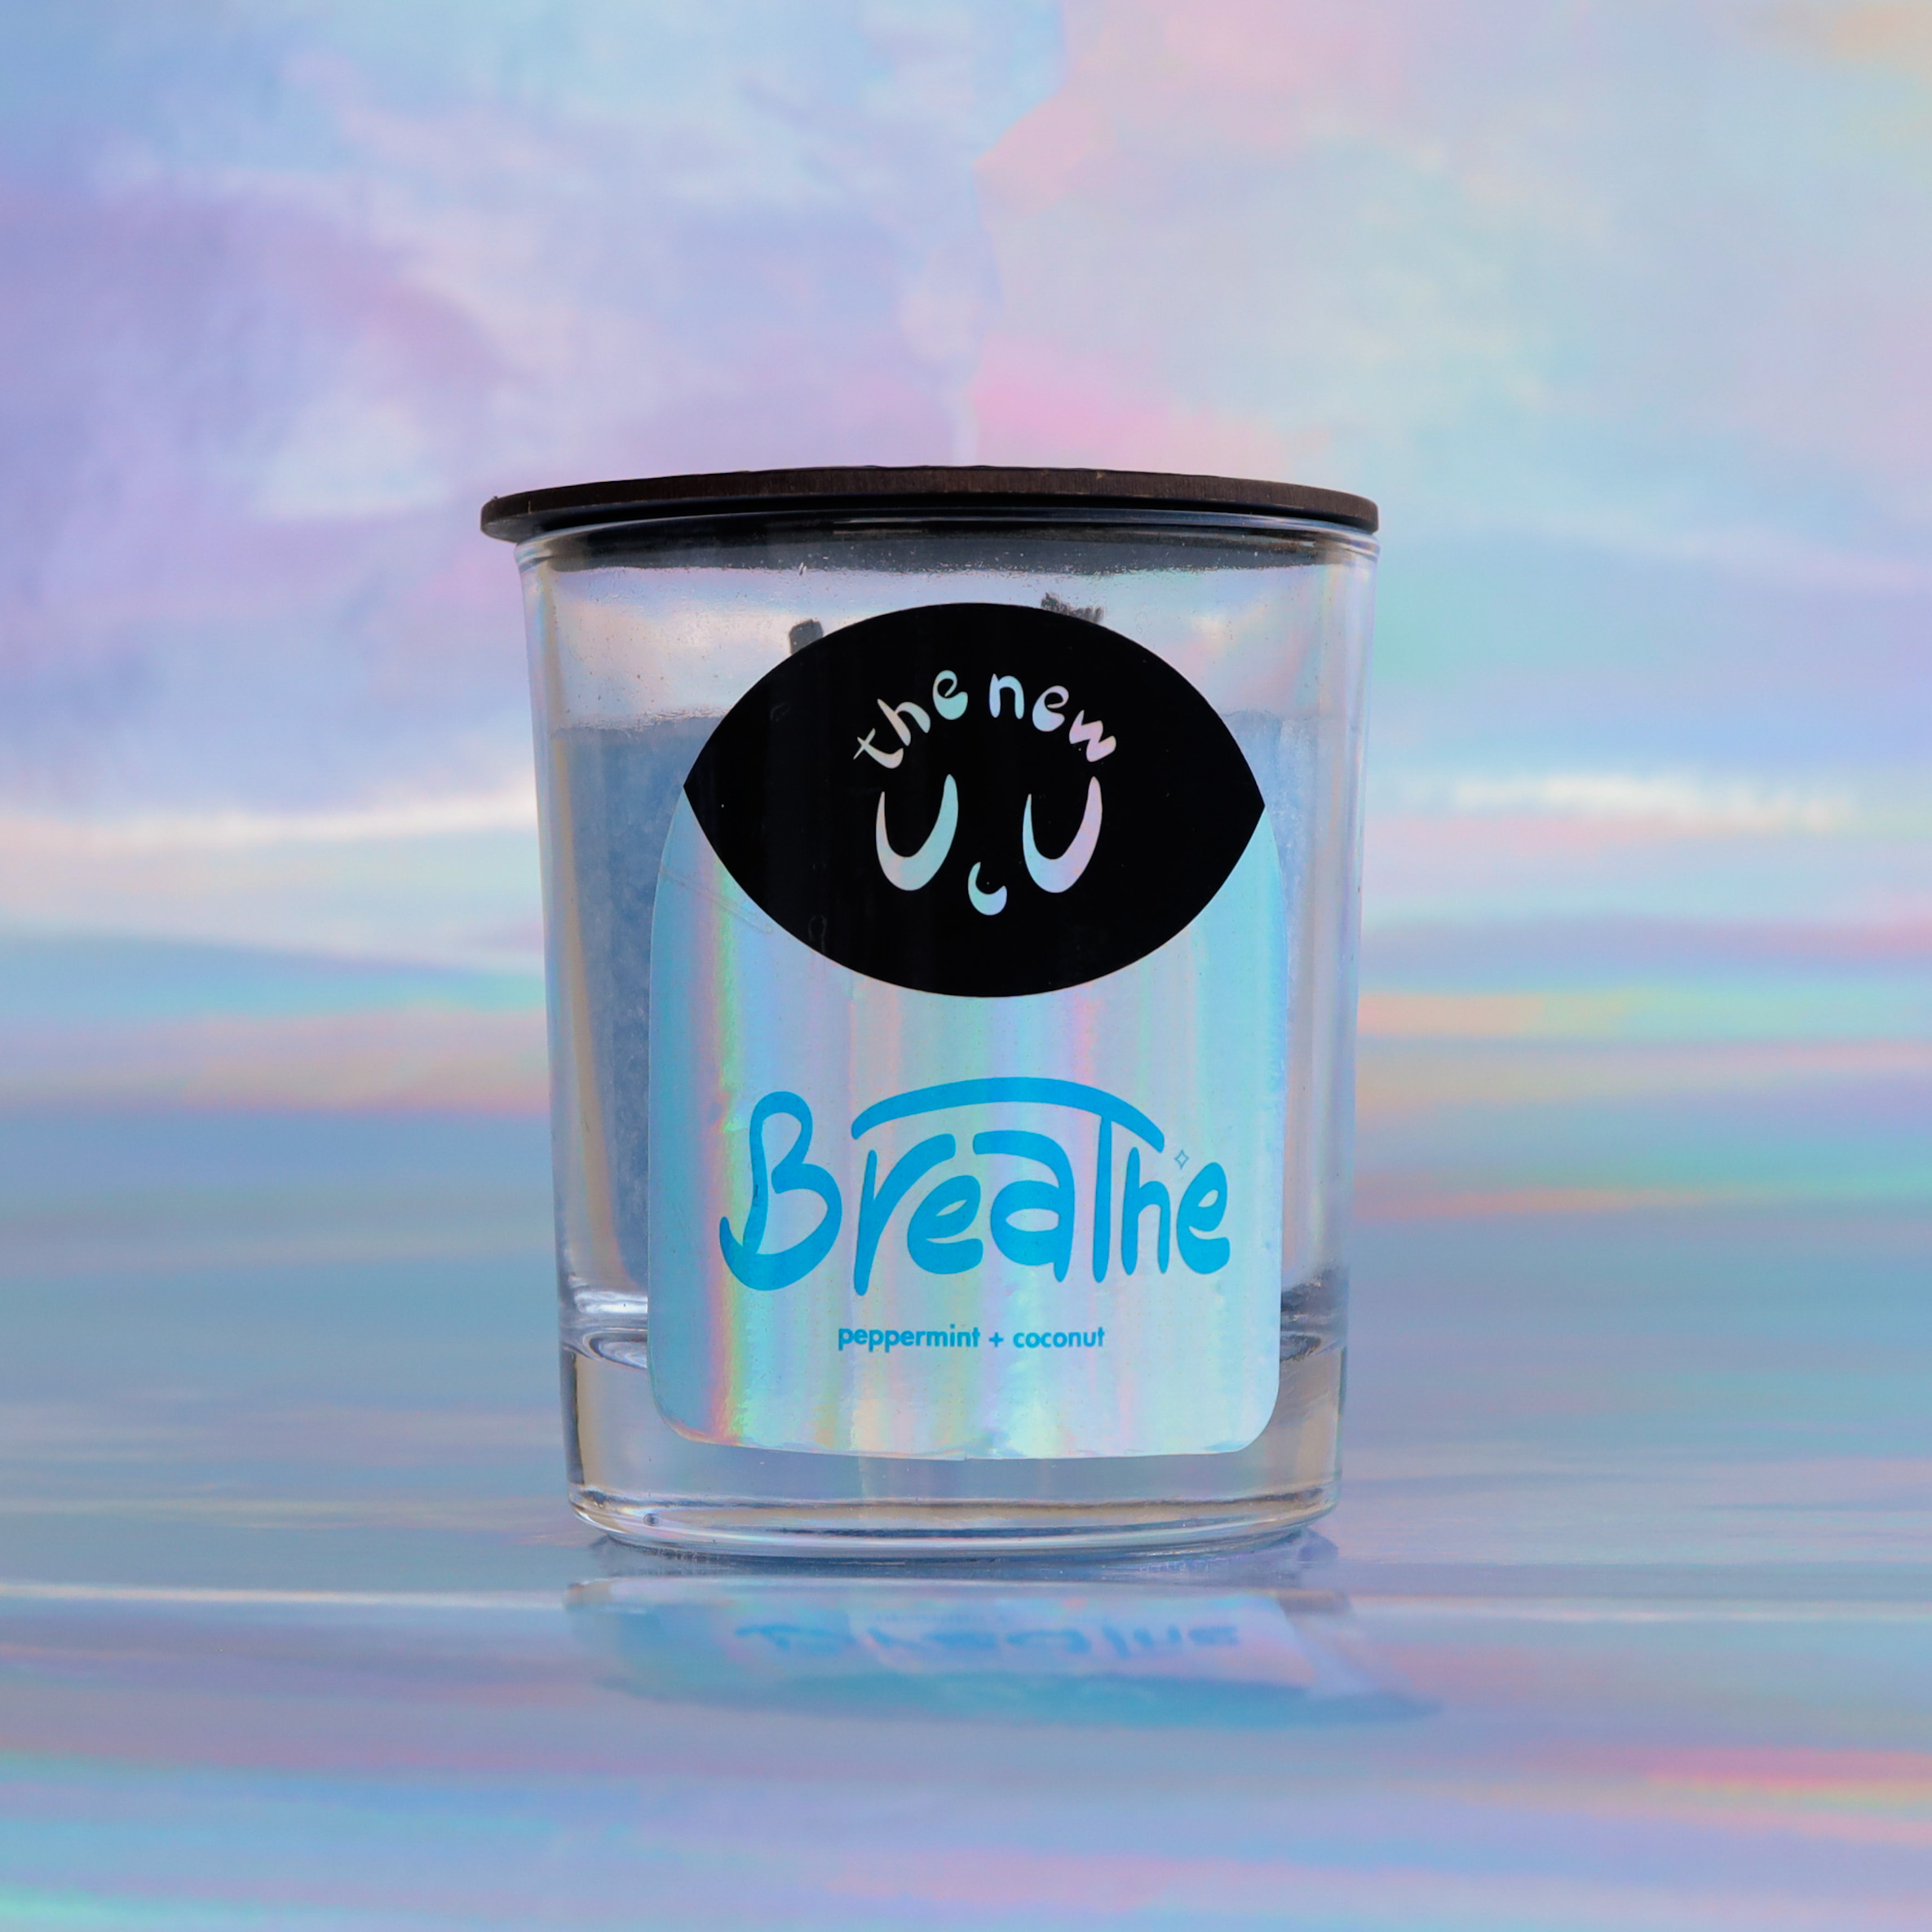 Breathe candle